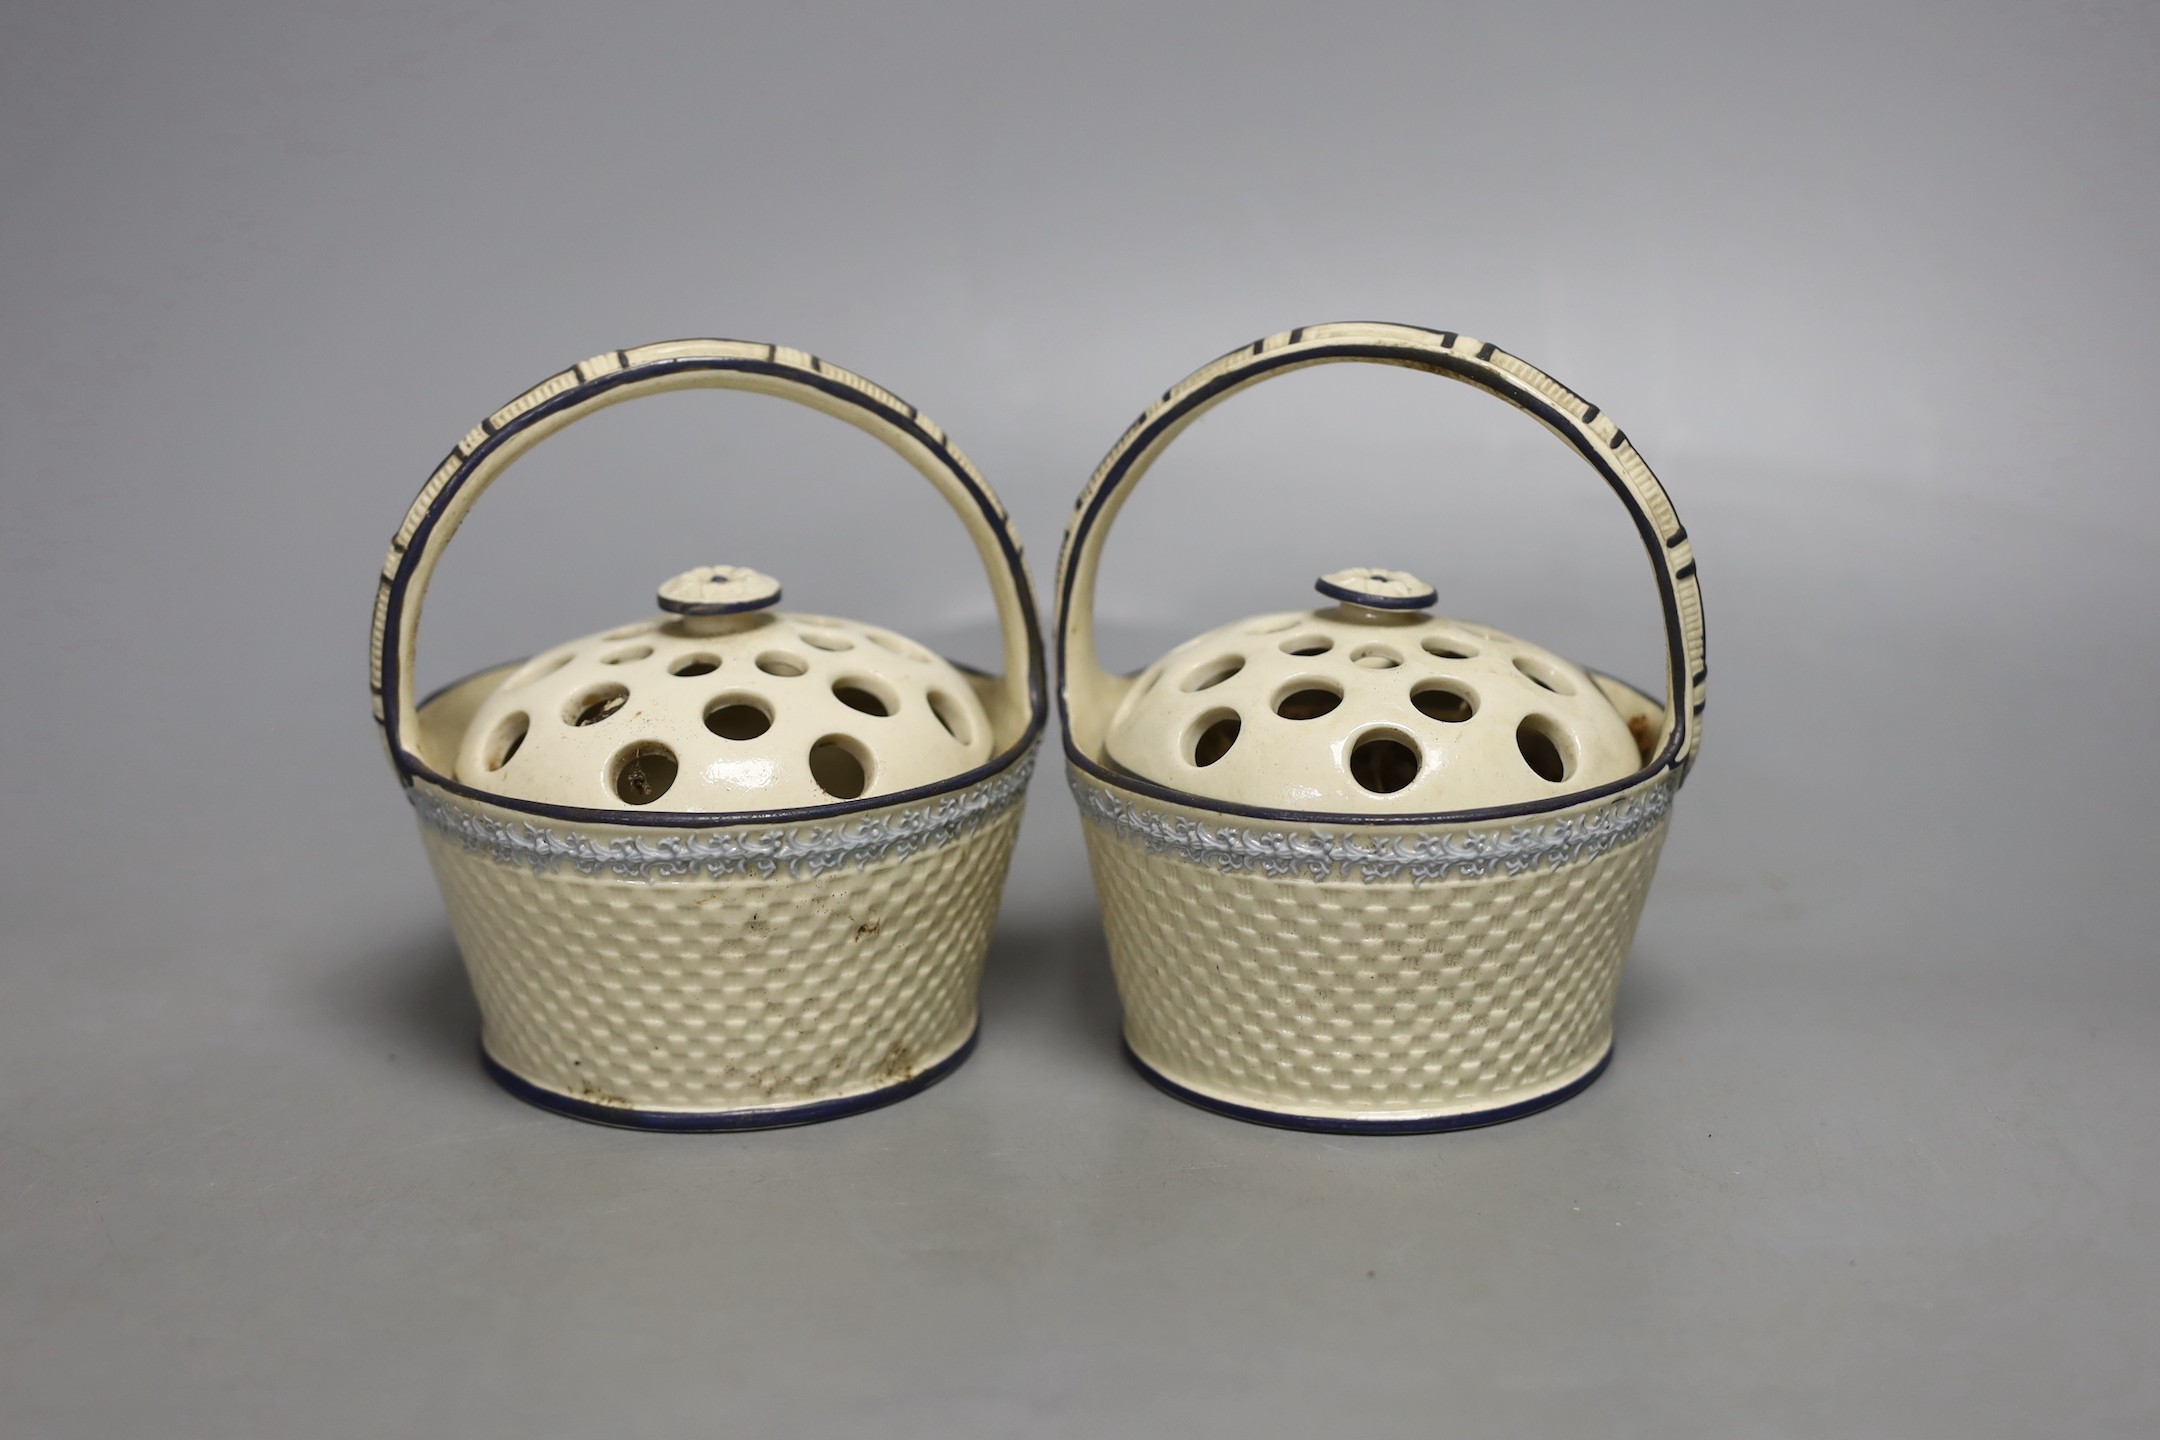 A pair of early 19th century creamware pot pourri baskets - 12cm high